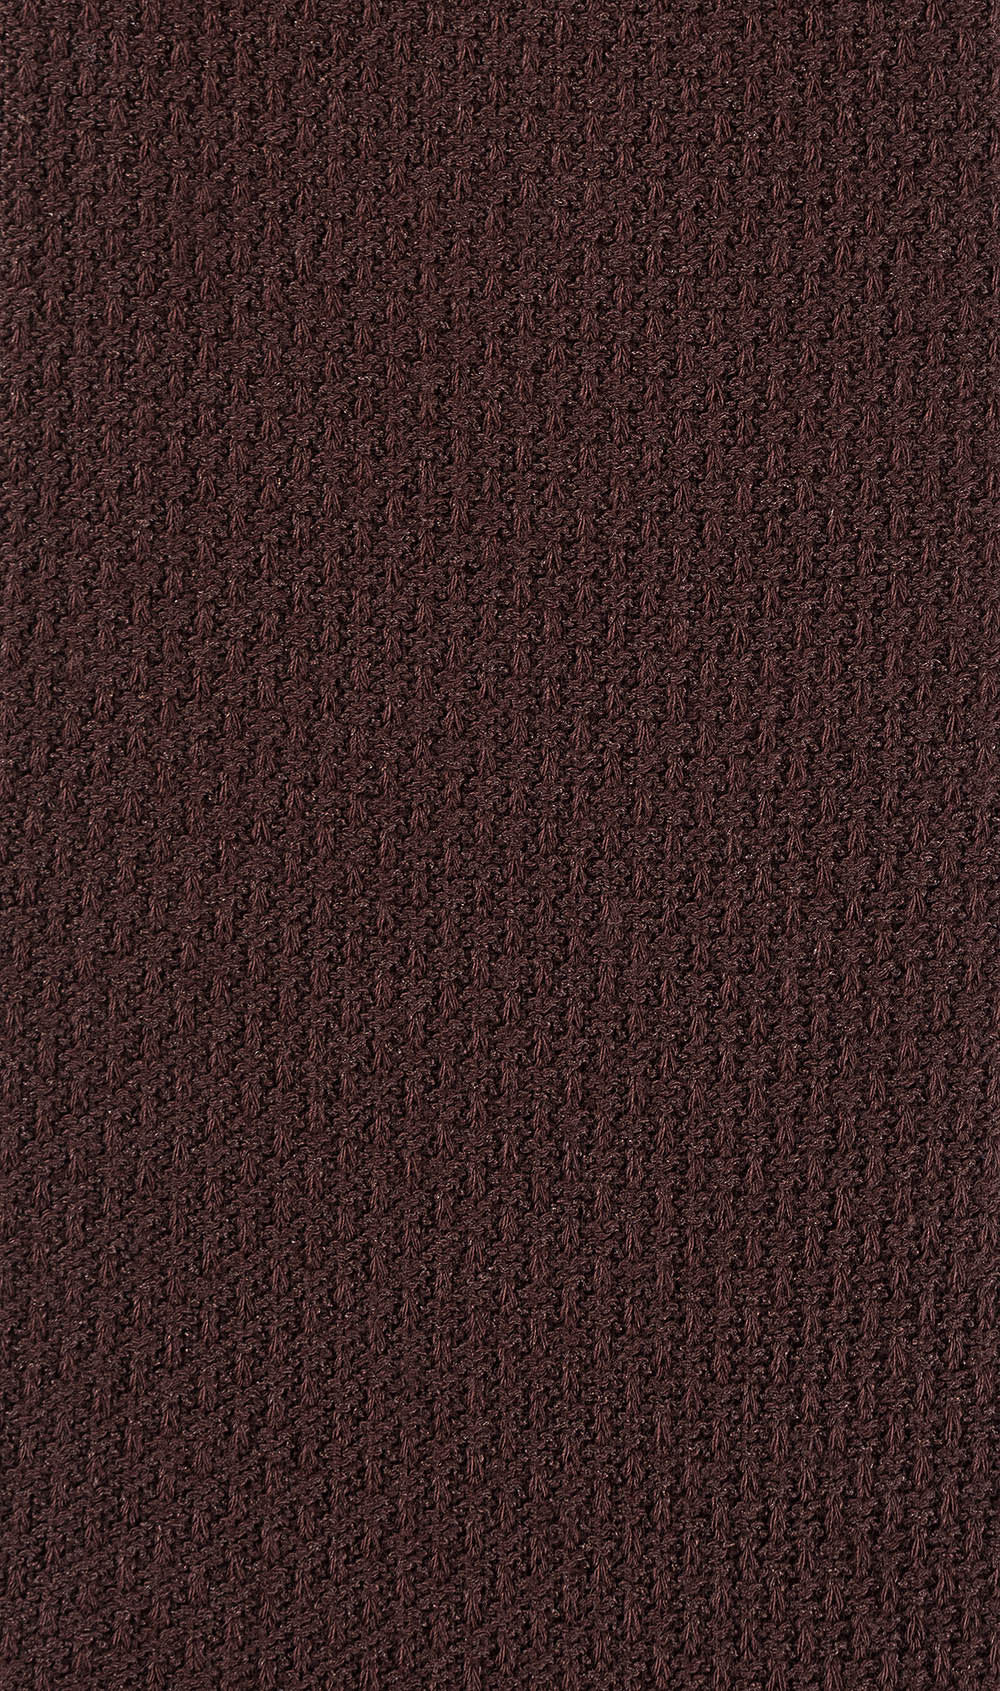 Dark Coffee Brown Textured Socks Pattern